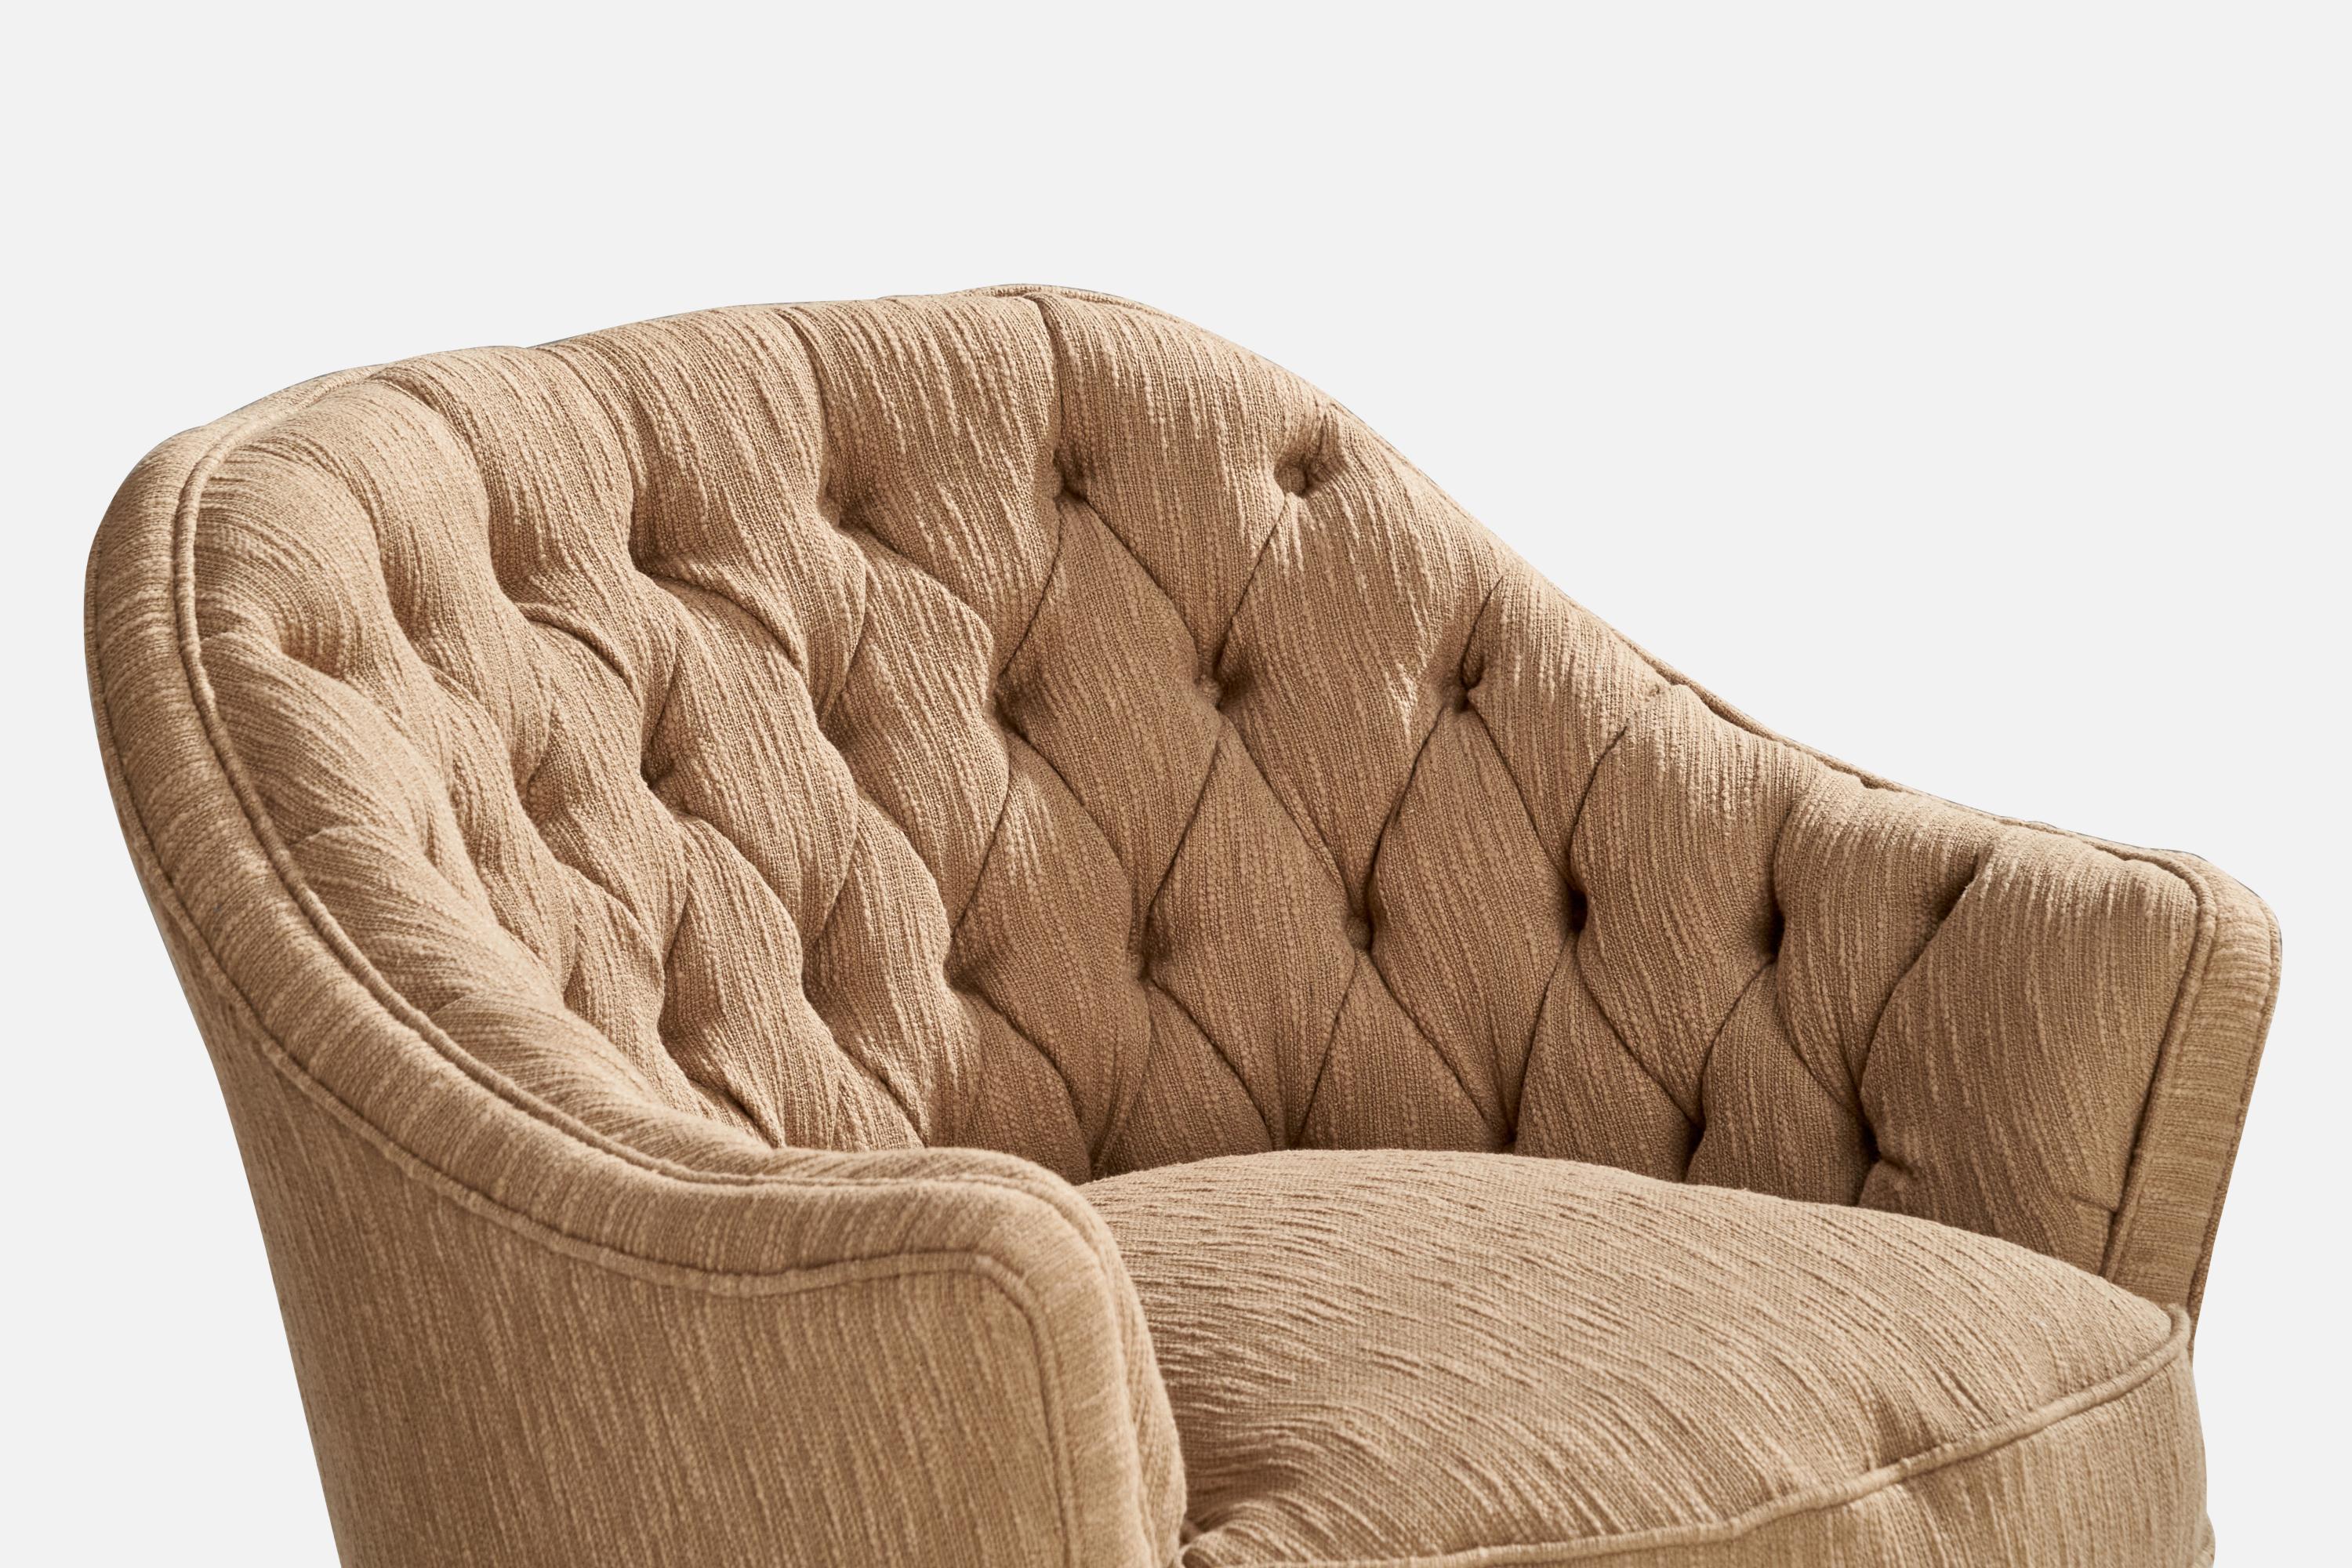 Casa e Giardino, Lounge Chairs, Fabric, Wood, Italy, 1940s For Sale 2